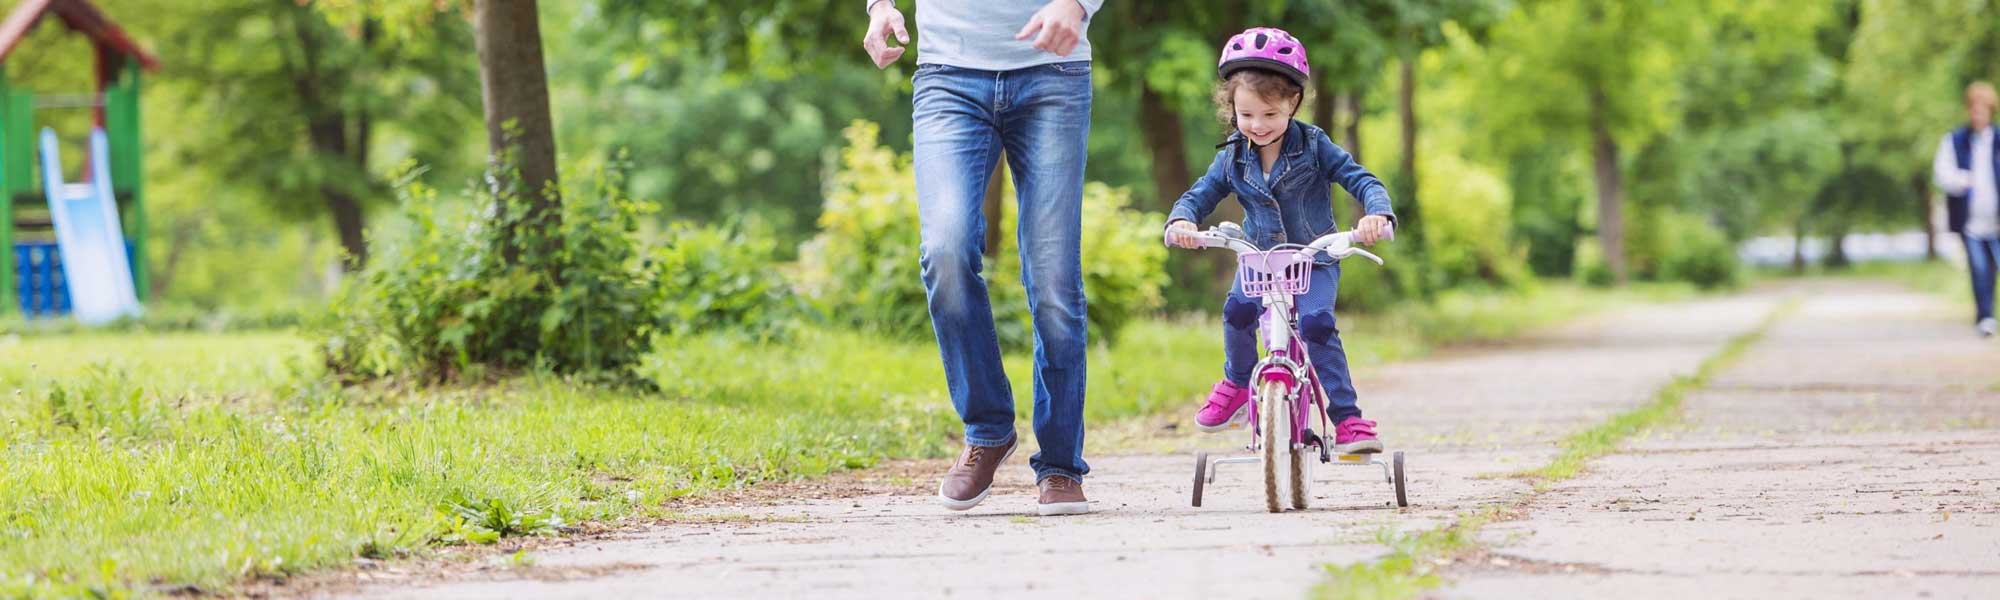 father teaching daughter to ride bike